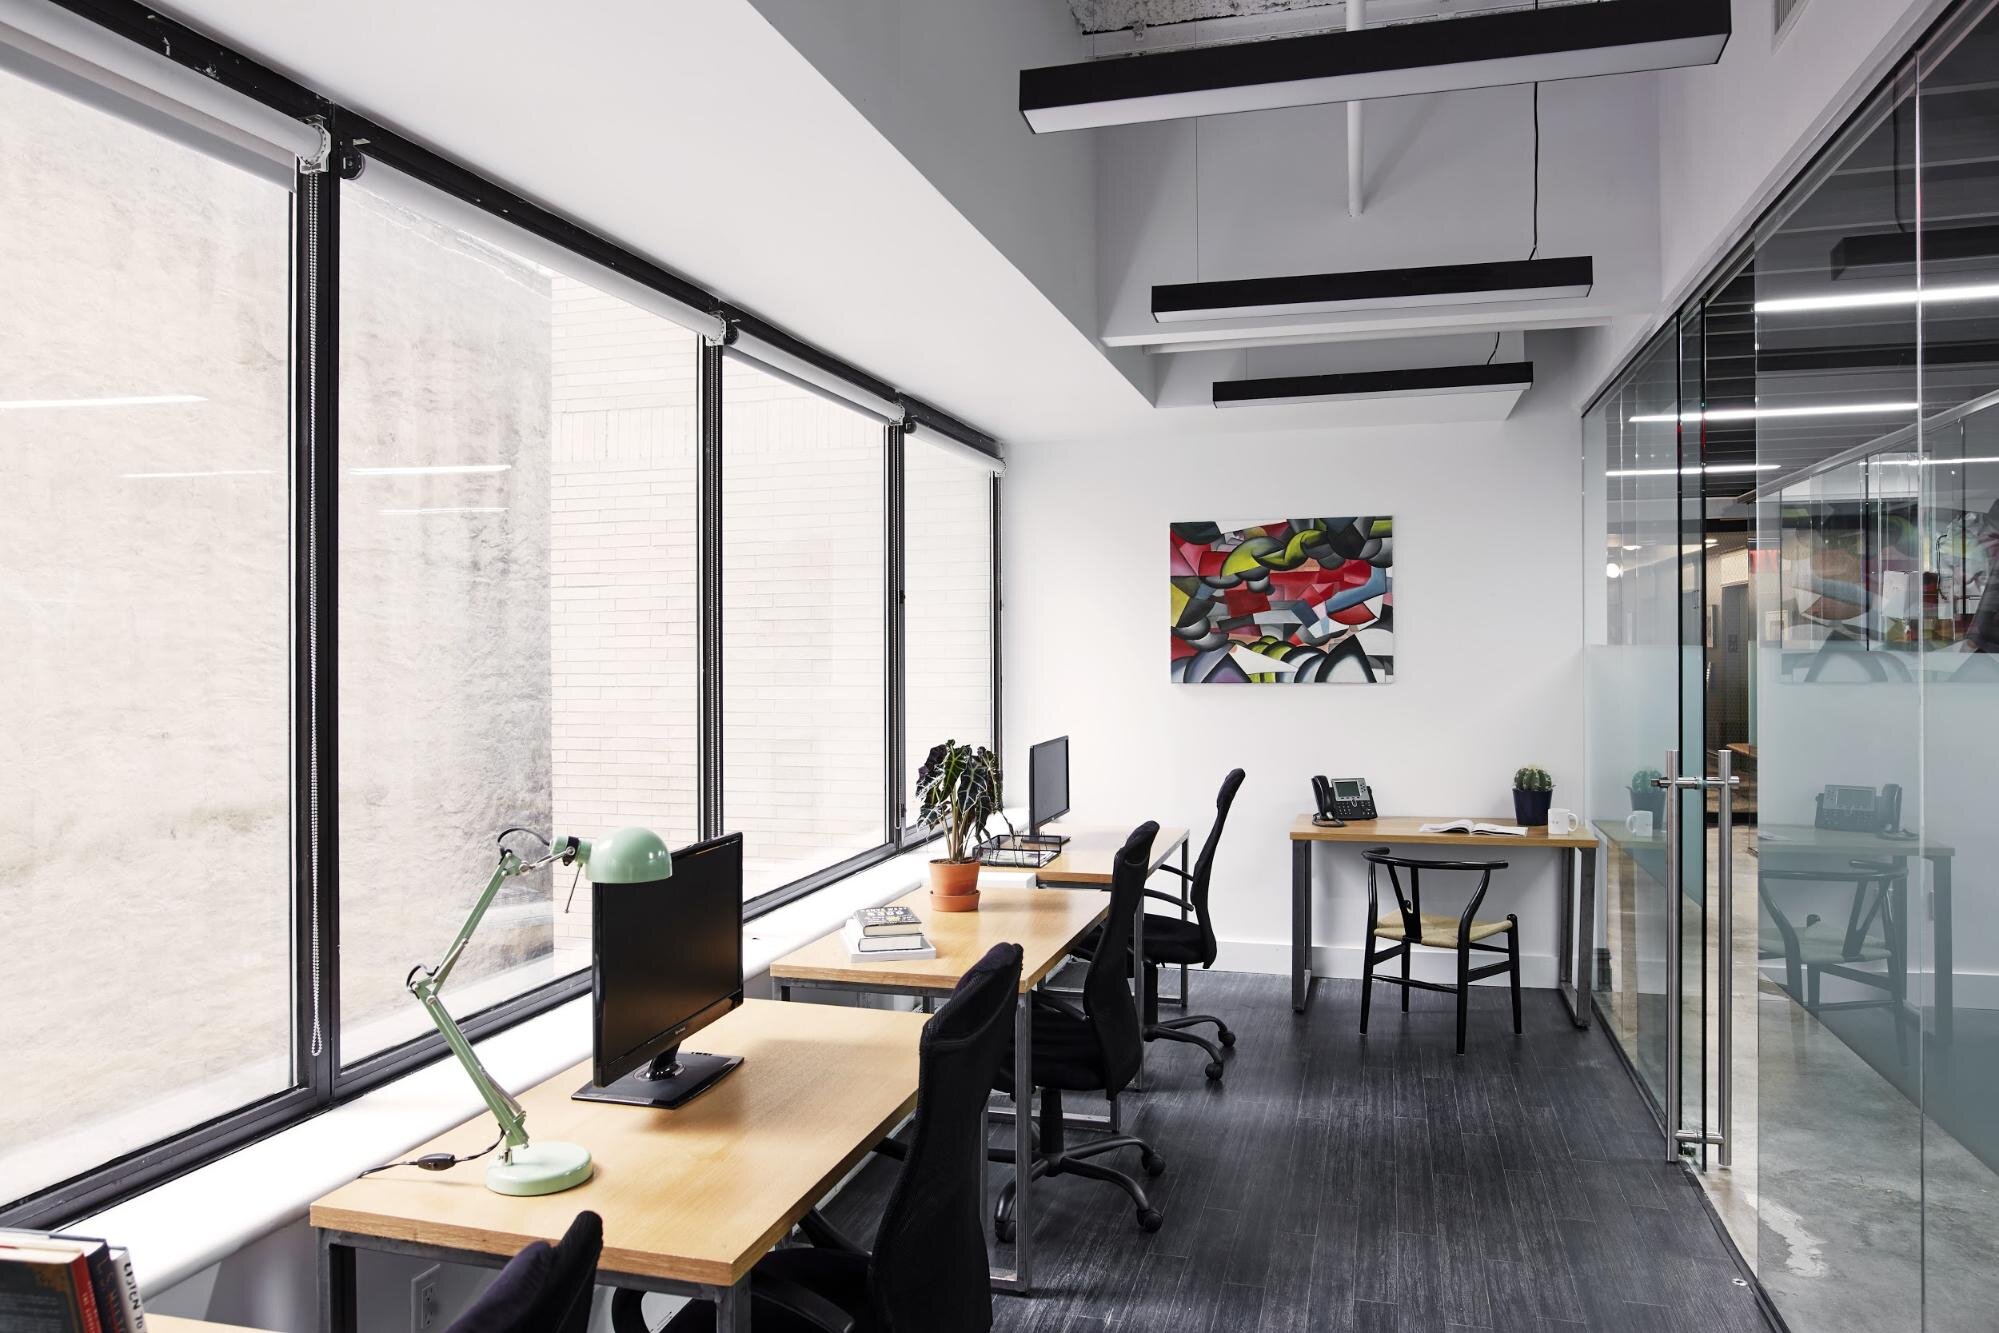 Desks facing windows in a shared work space